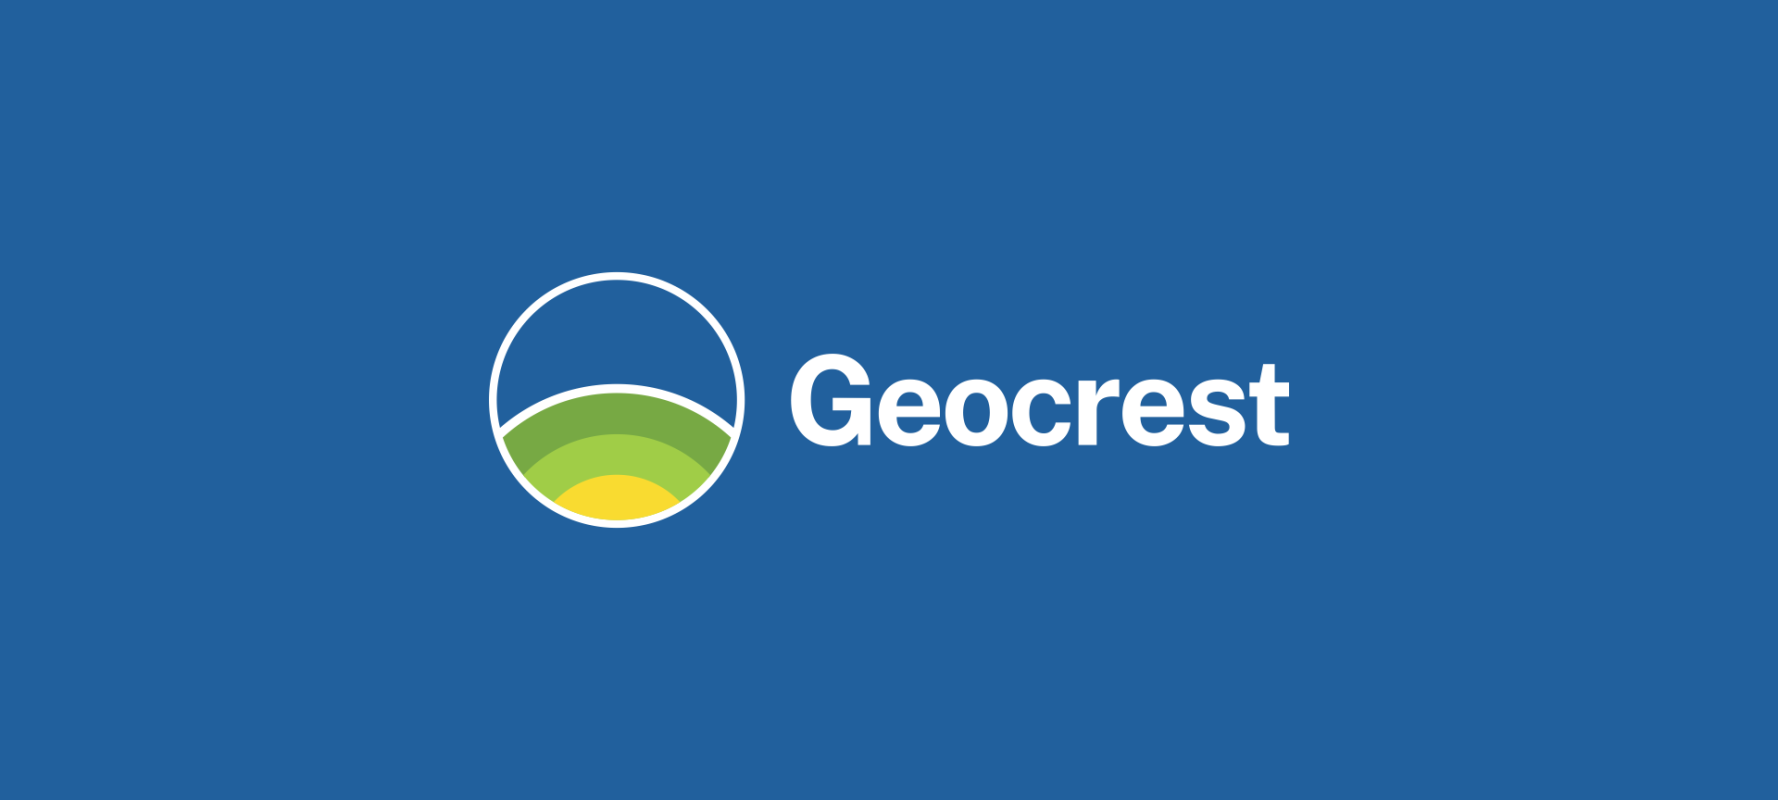 Geocresst banner